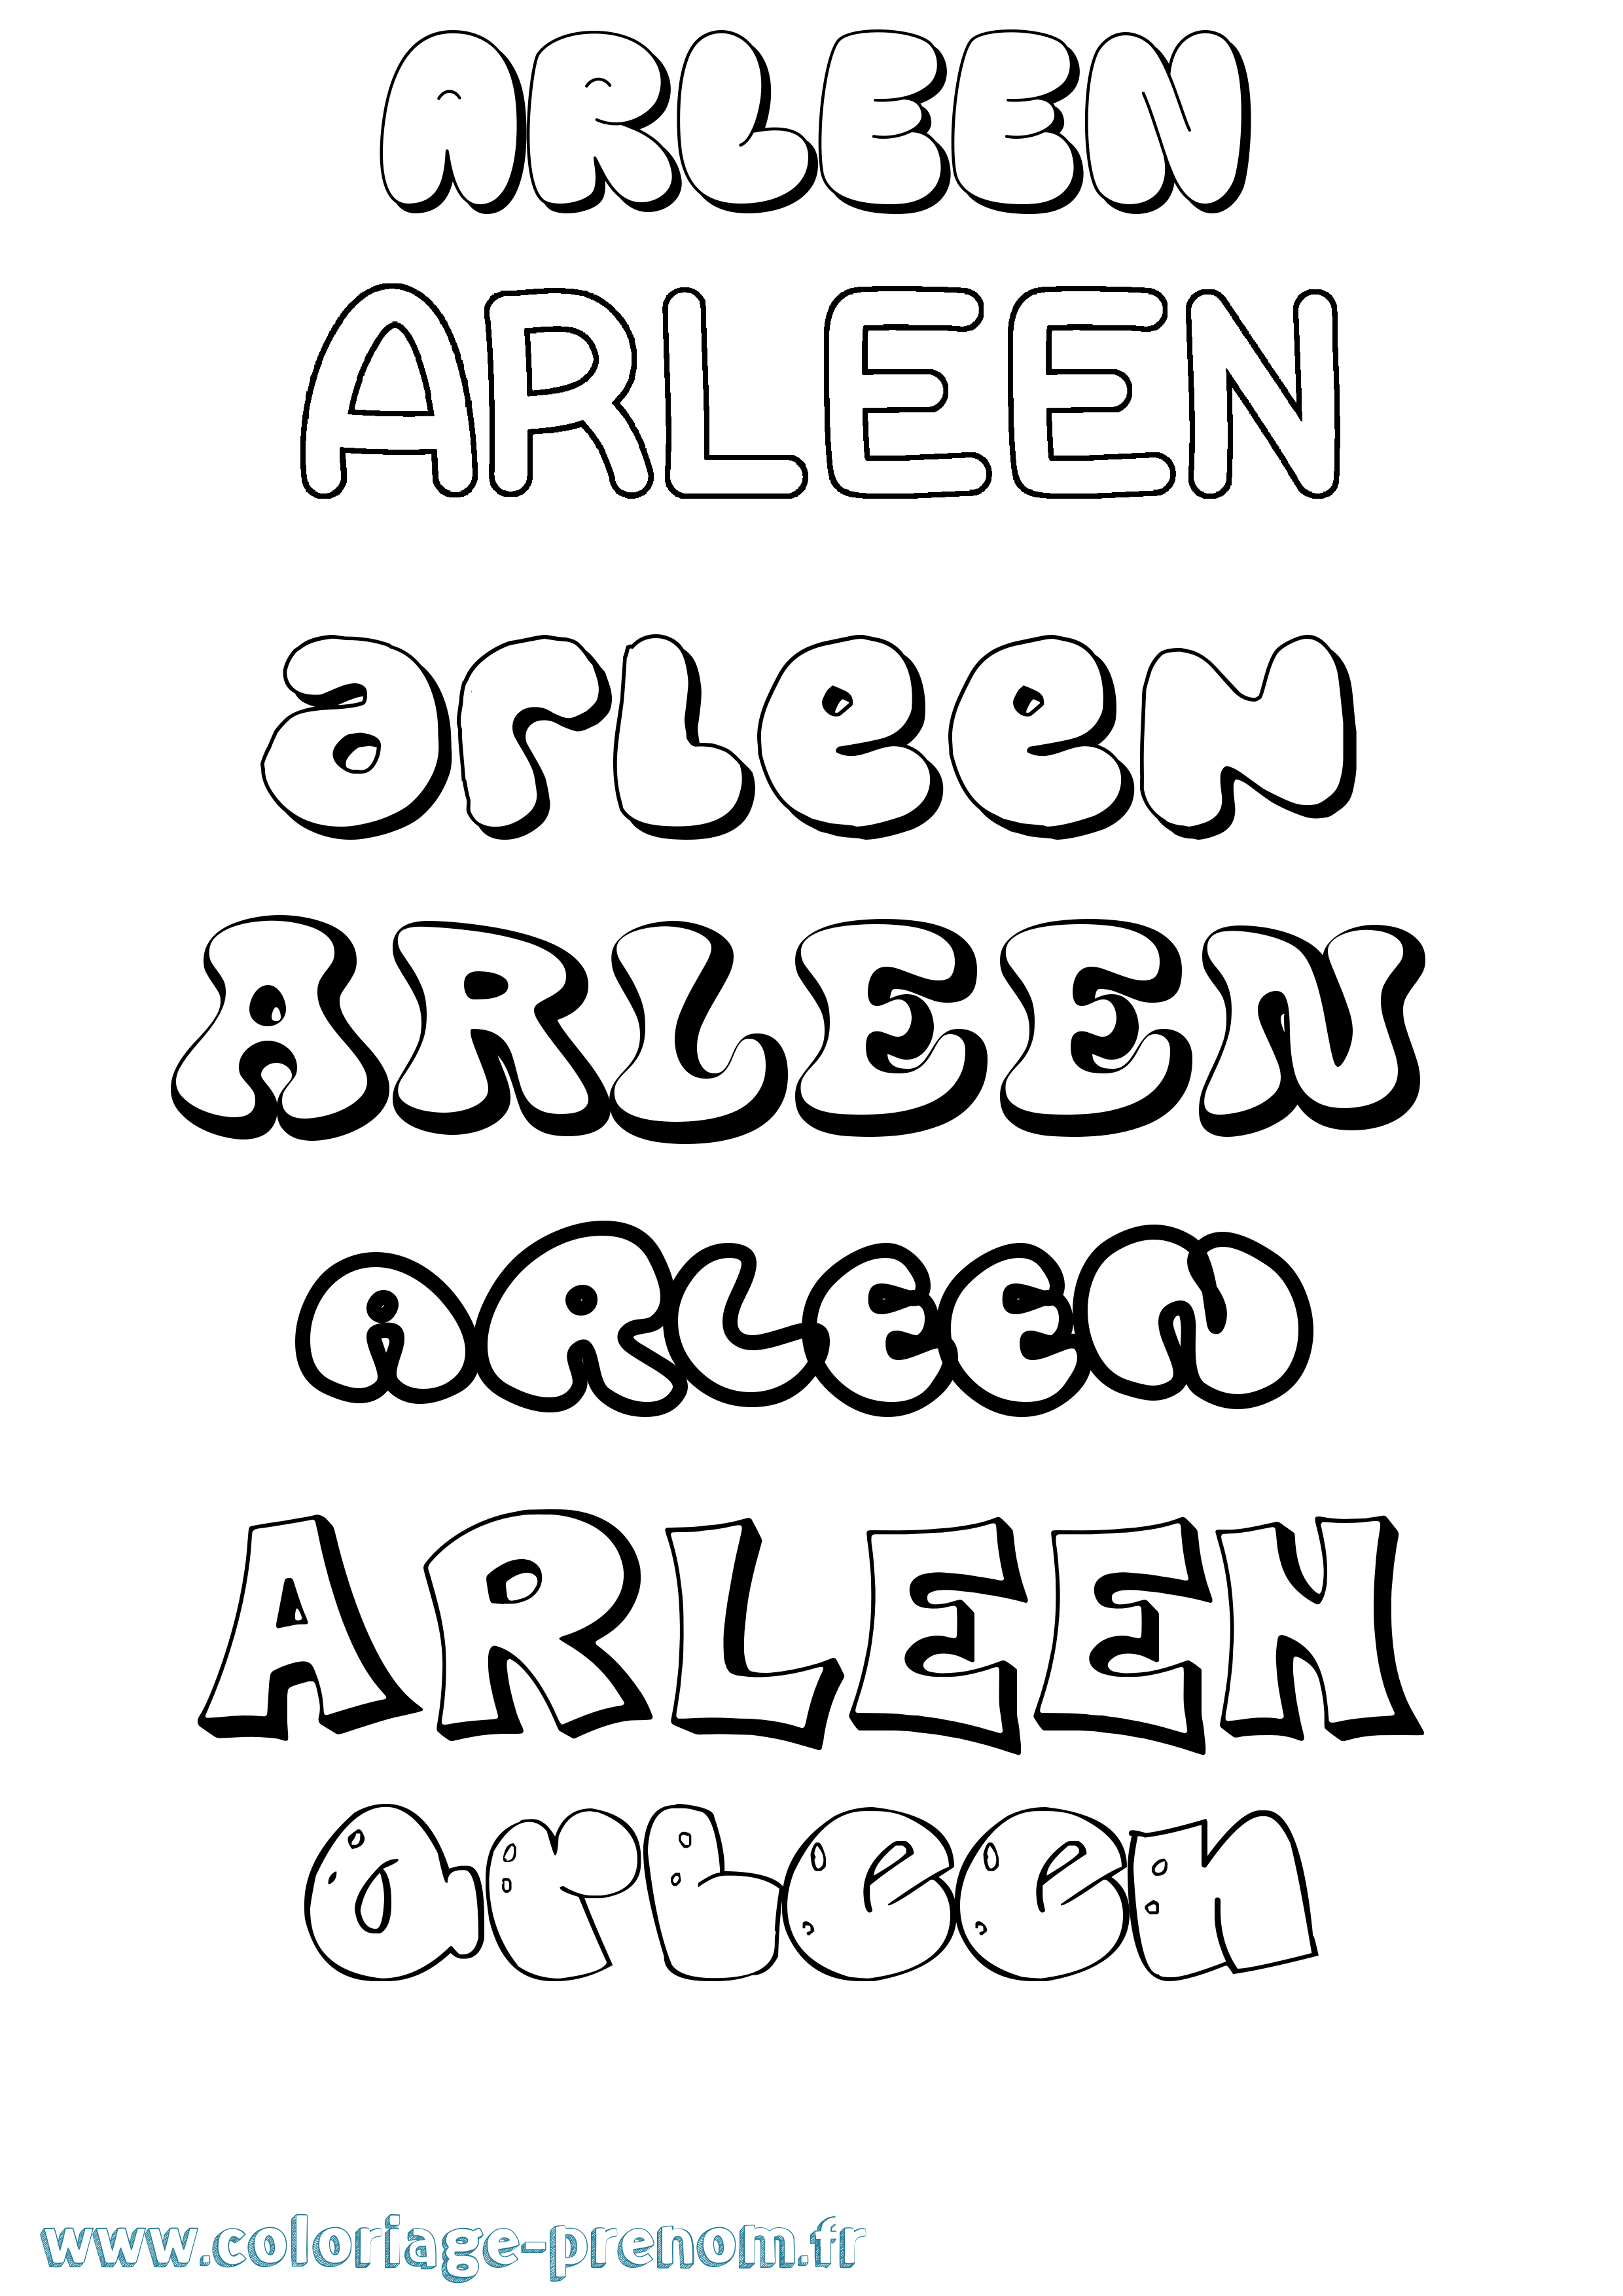 Coloriage prénom Arleen Bubble